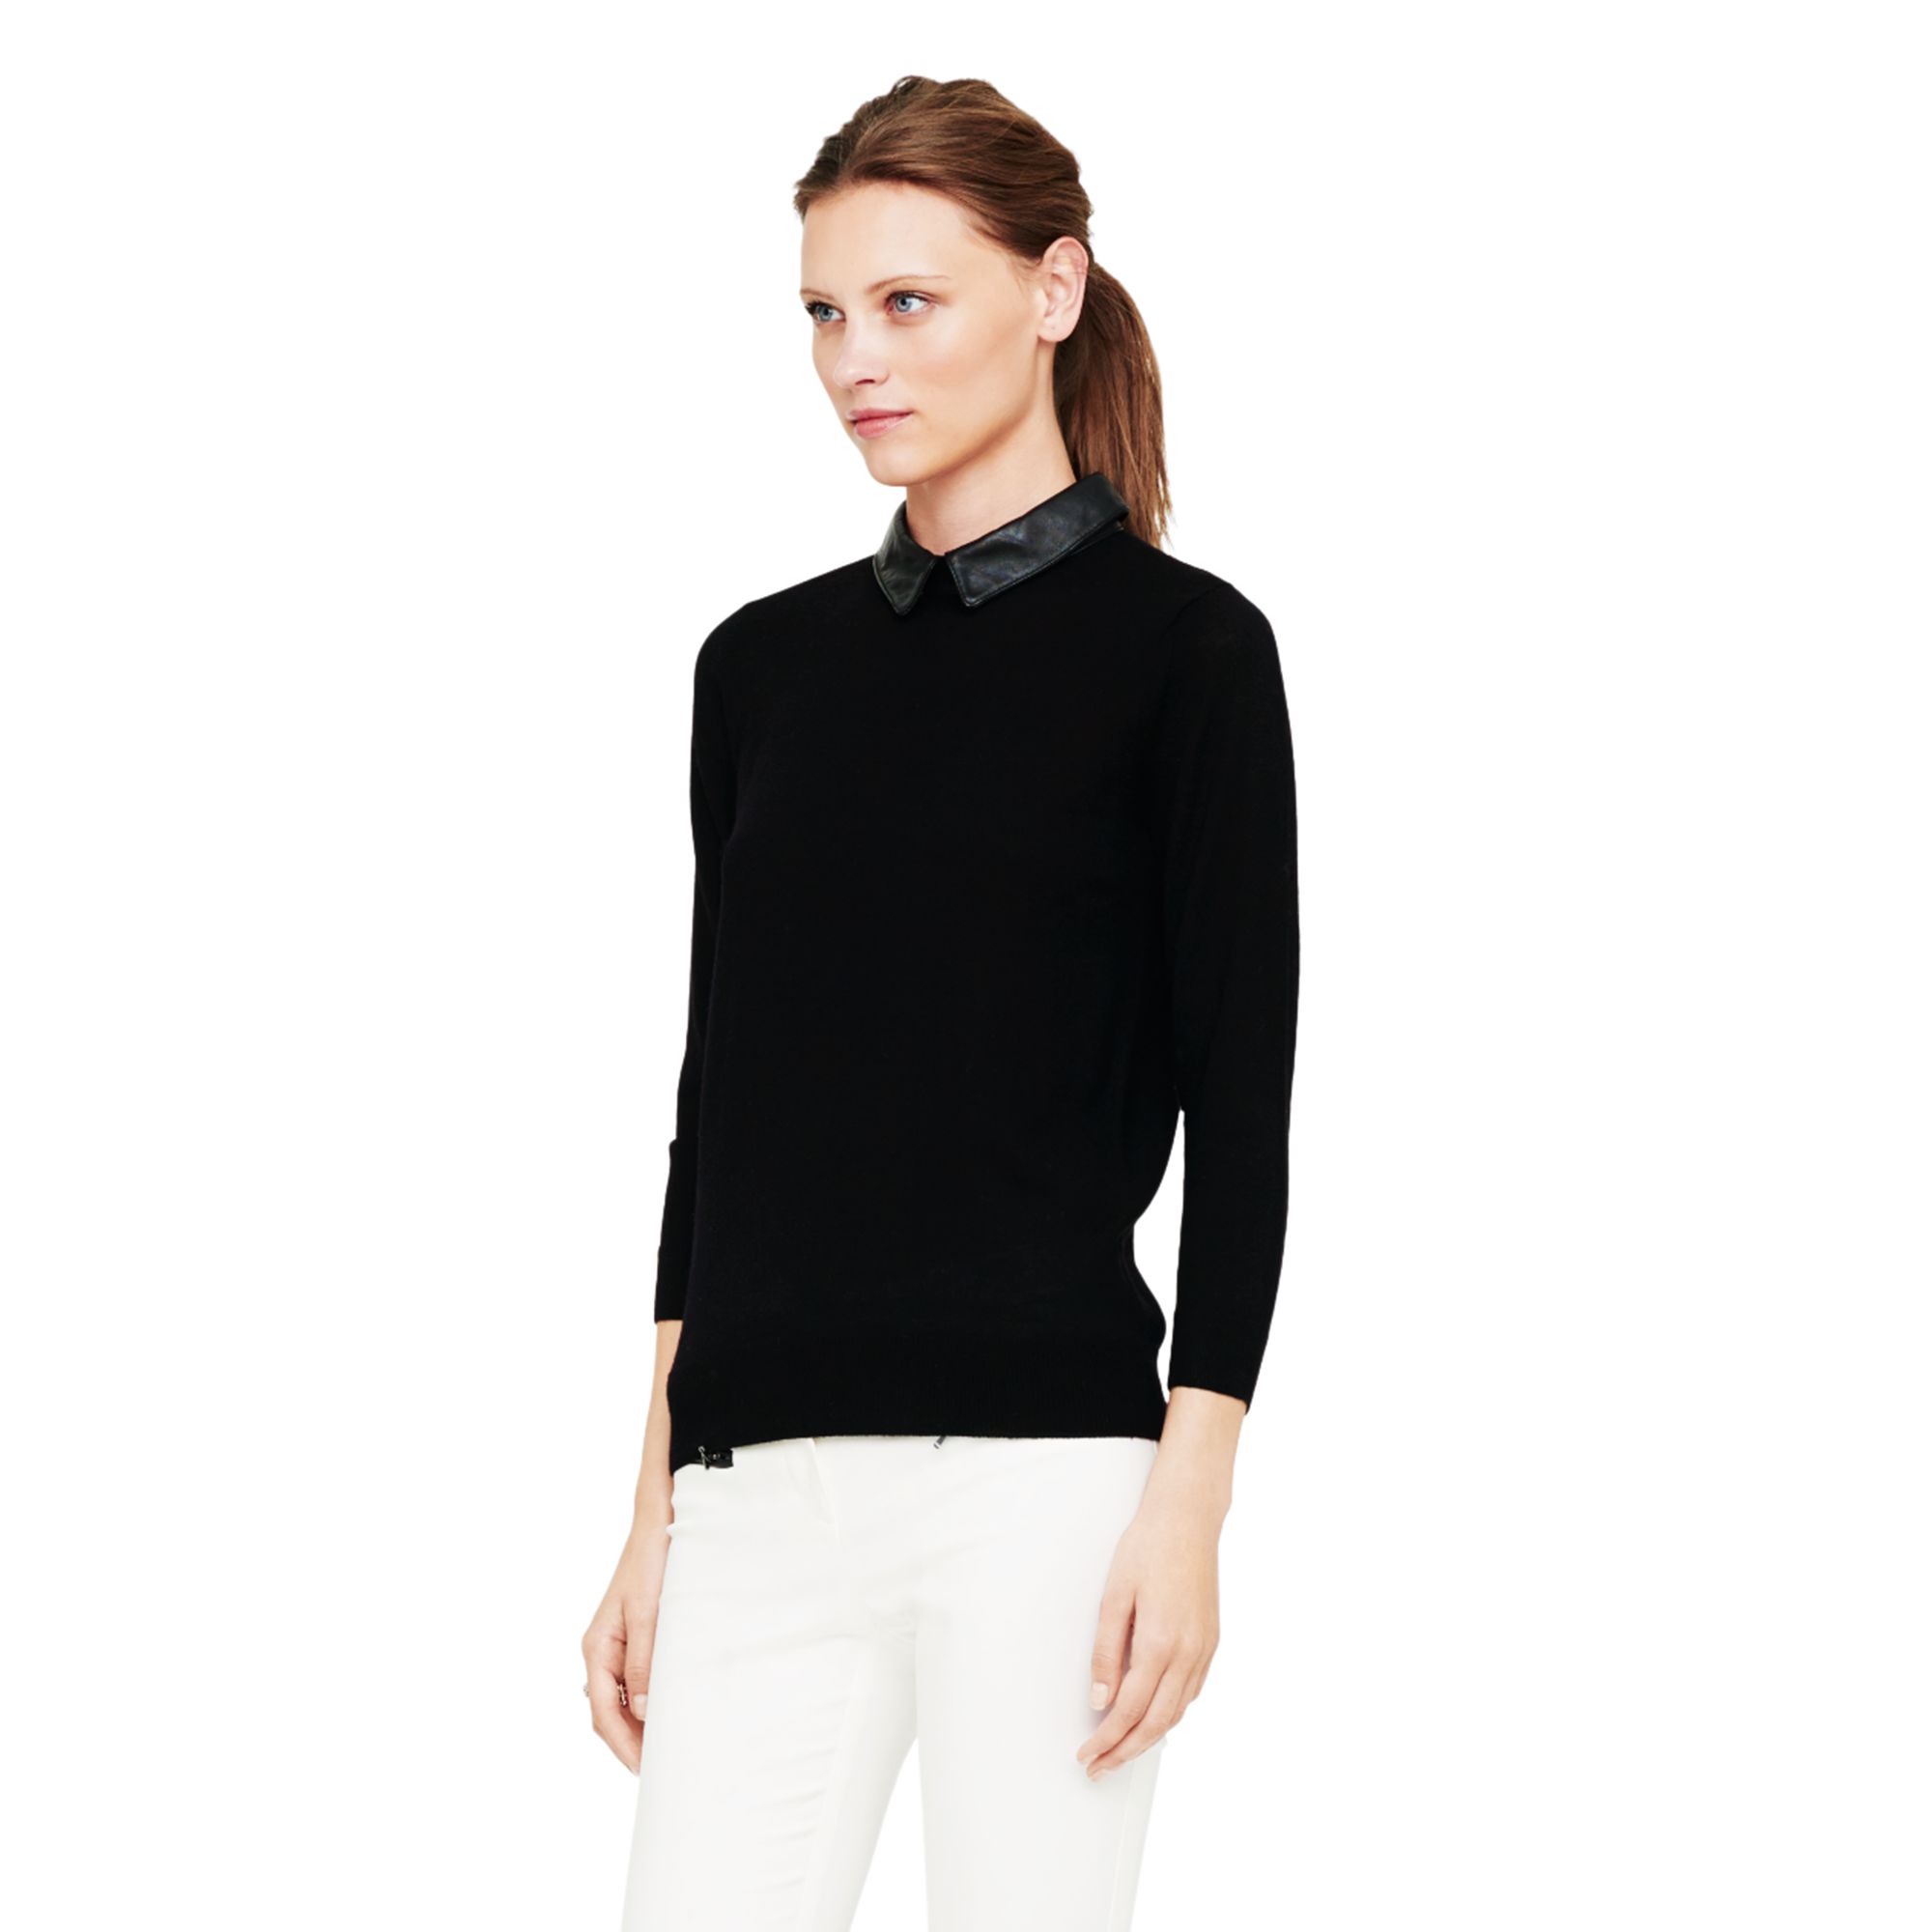 Lyst - Club Monaco Riley Leather Collar Sweater in Black